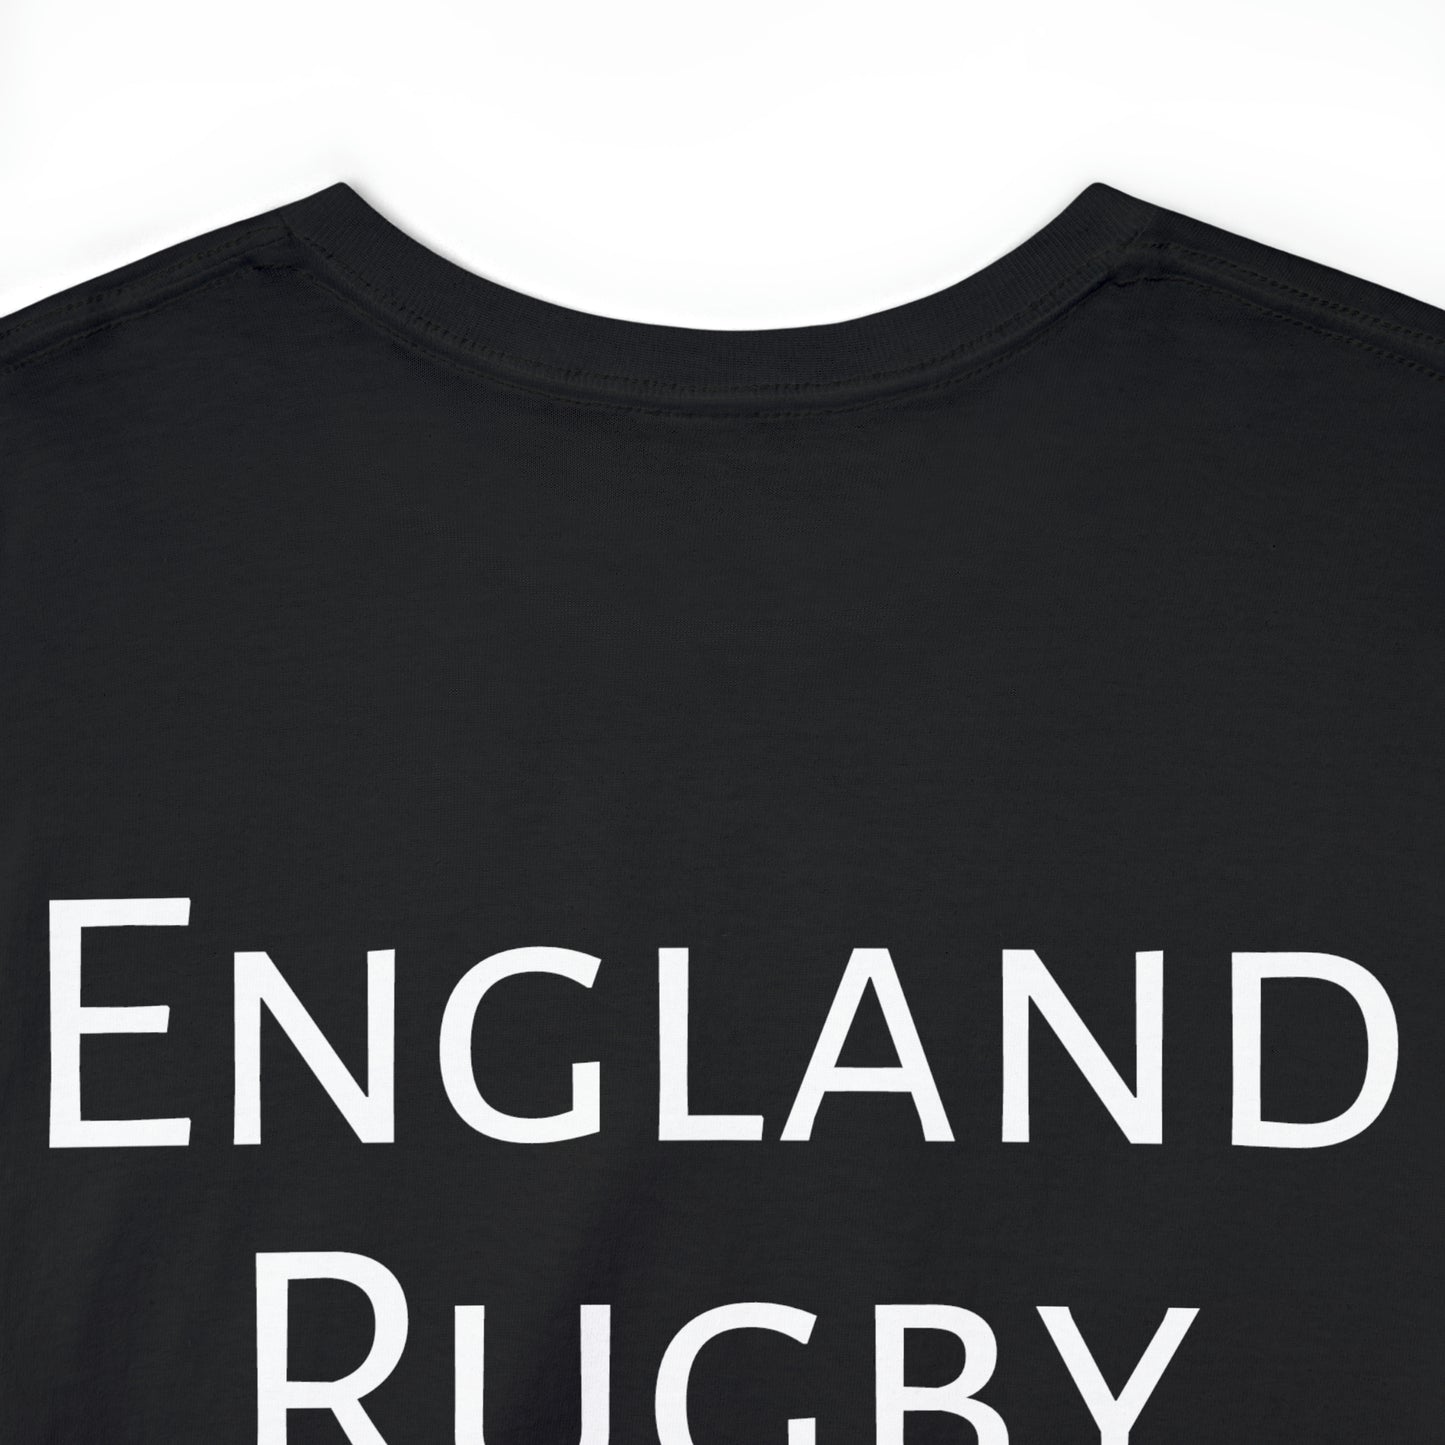 Ready England - dark shirts